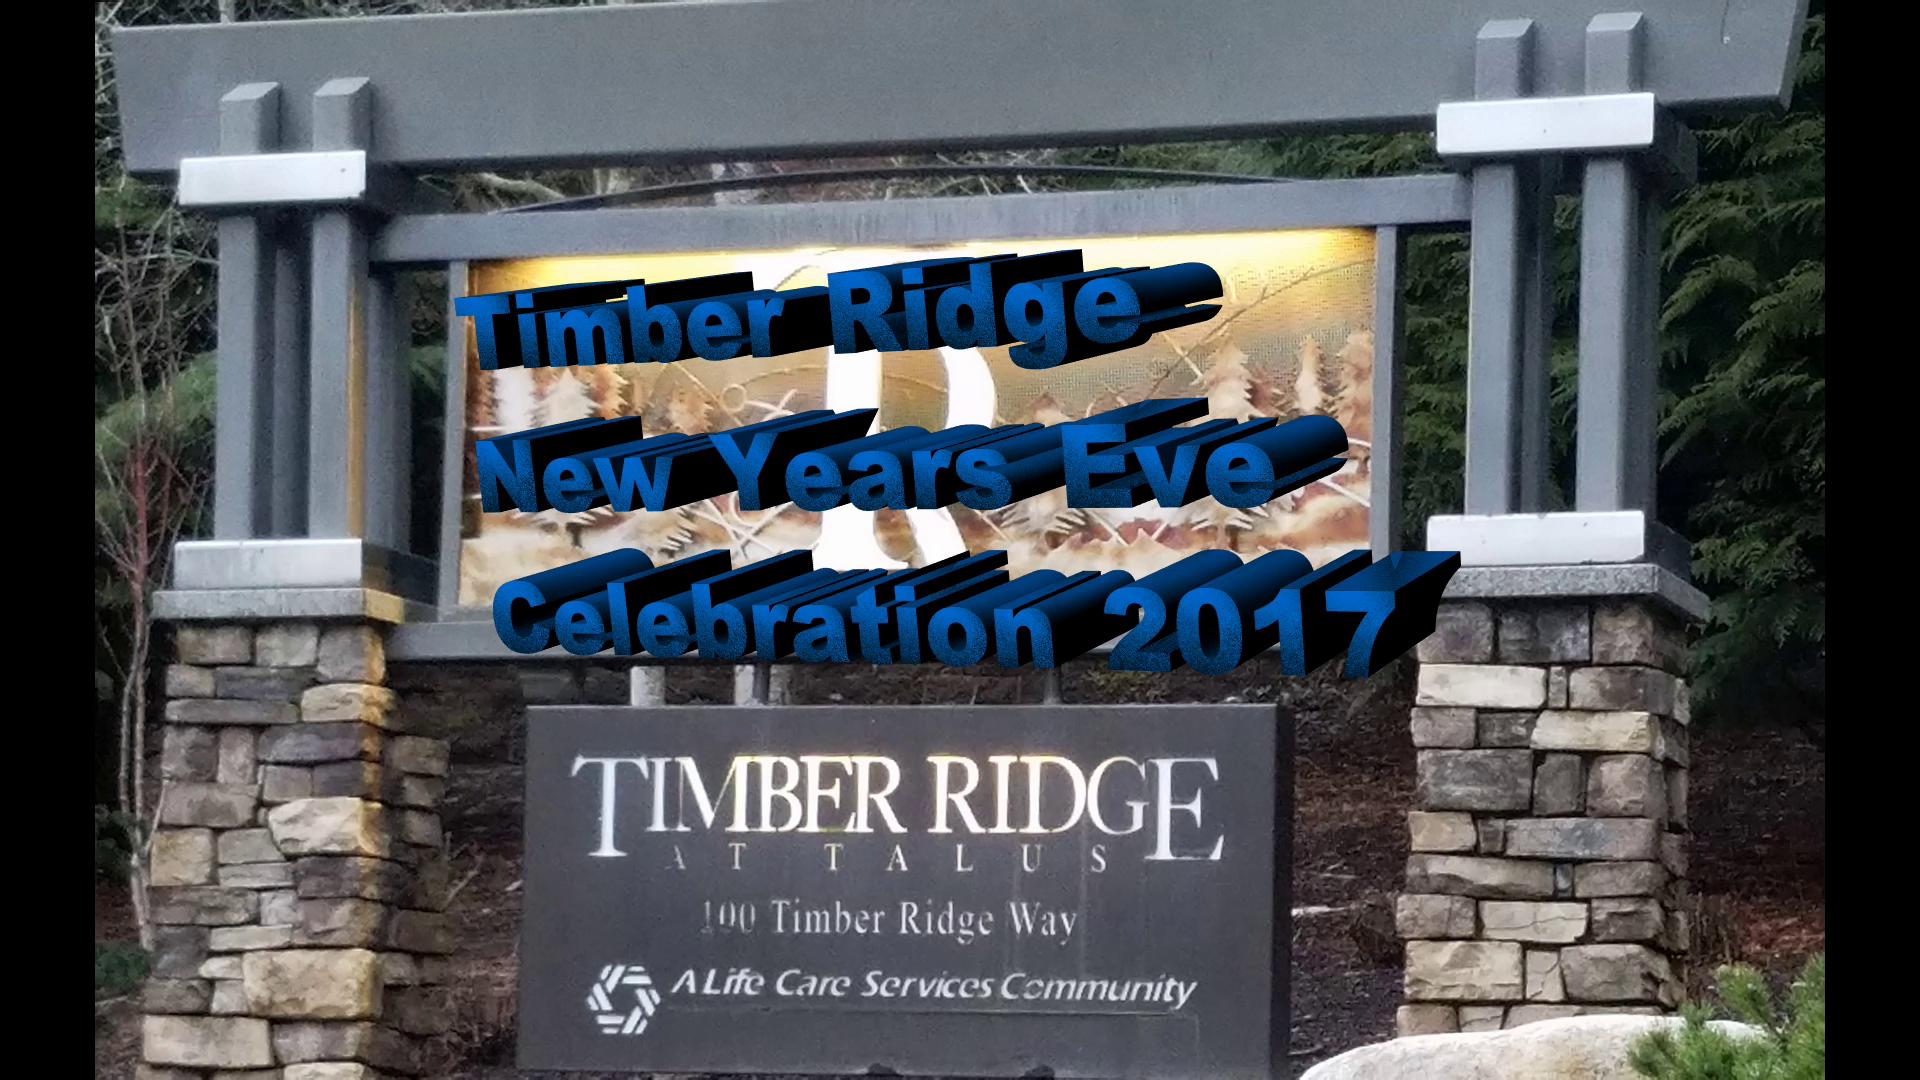 Timber Ridge New Years Eve Celebration 2017